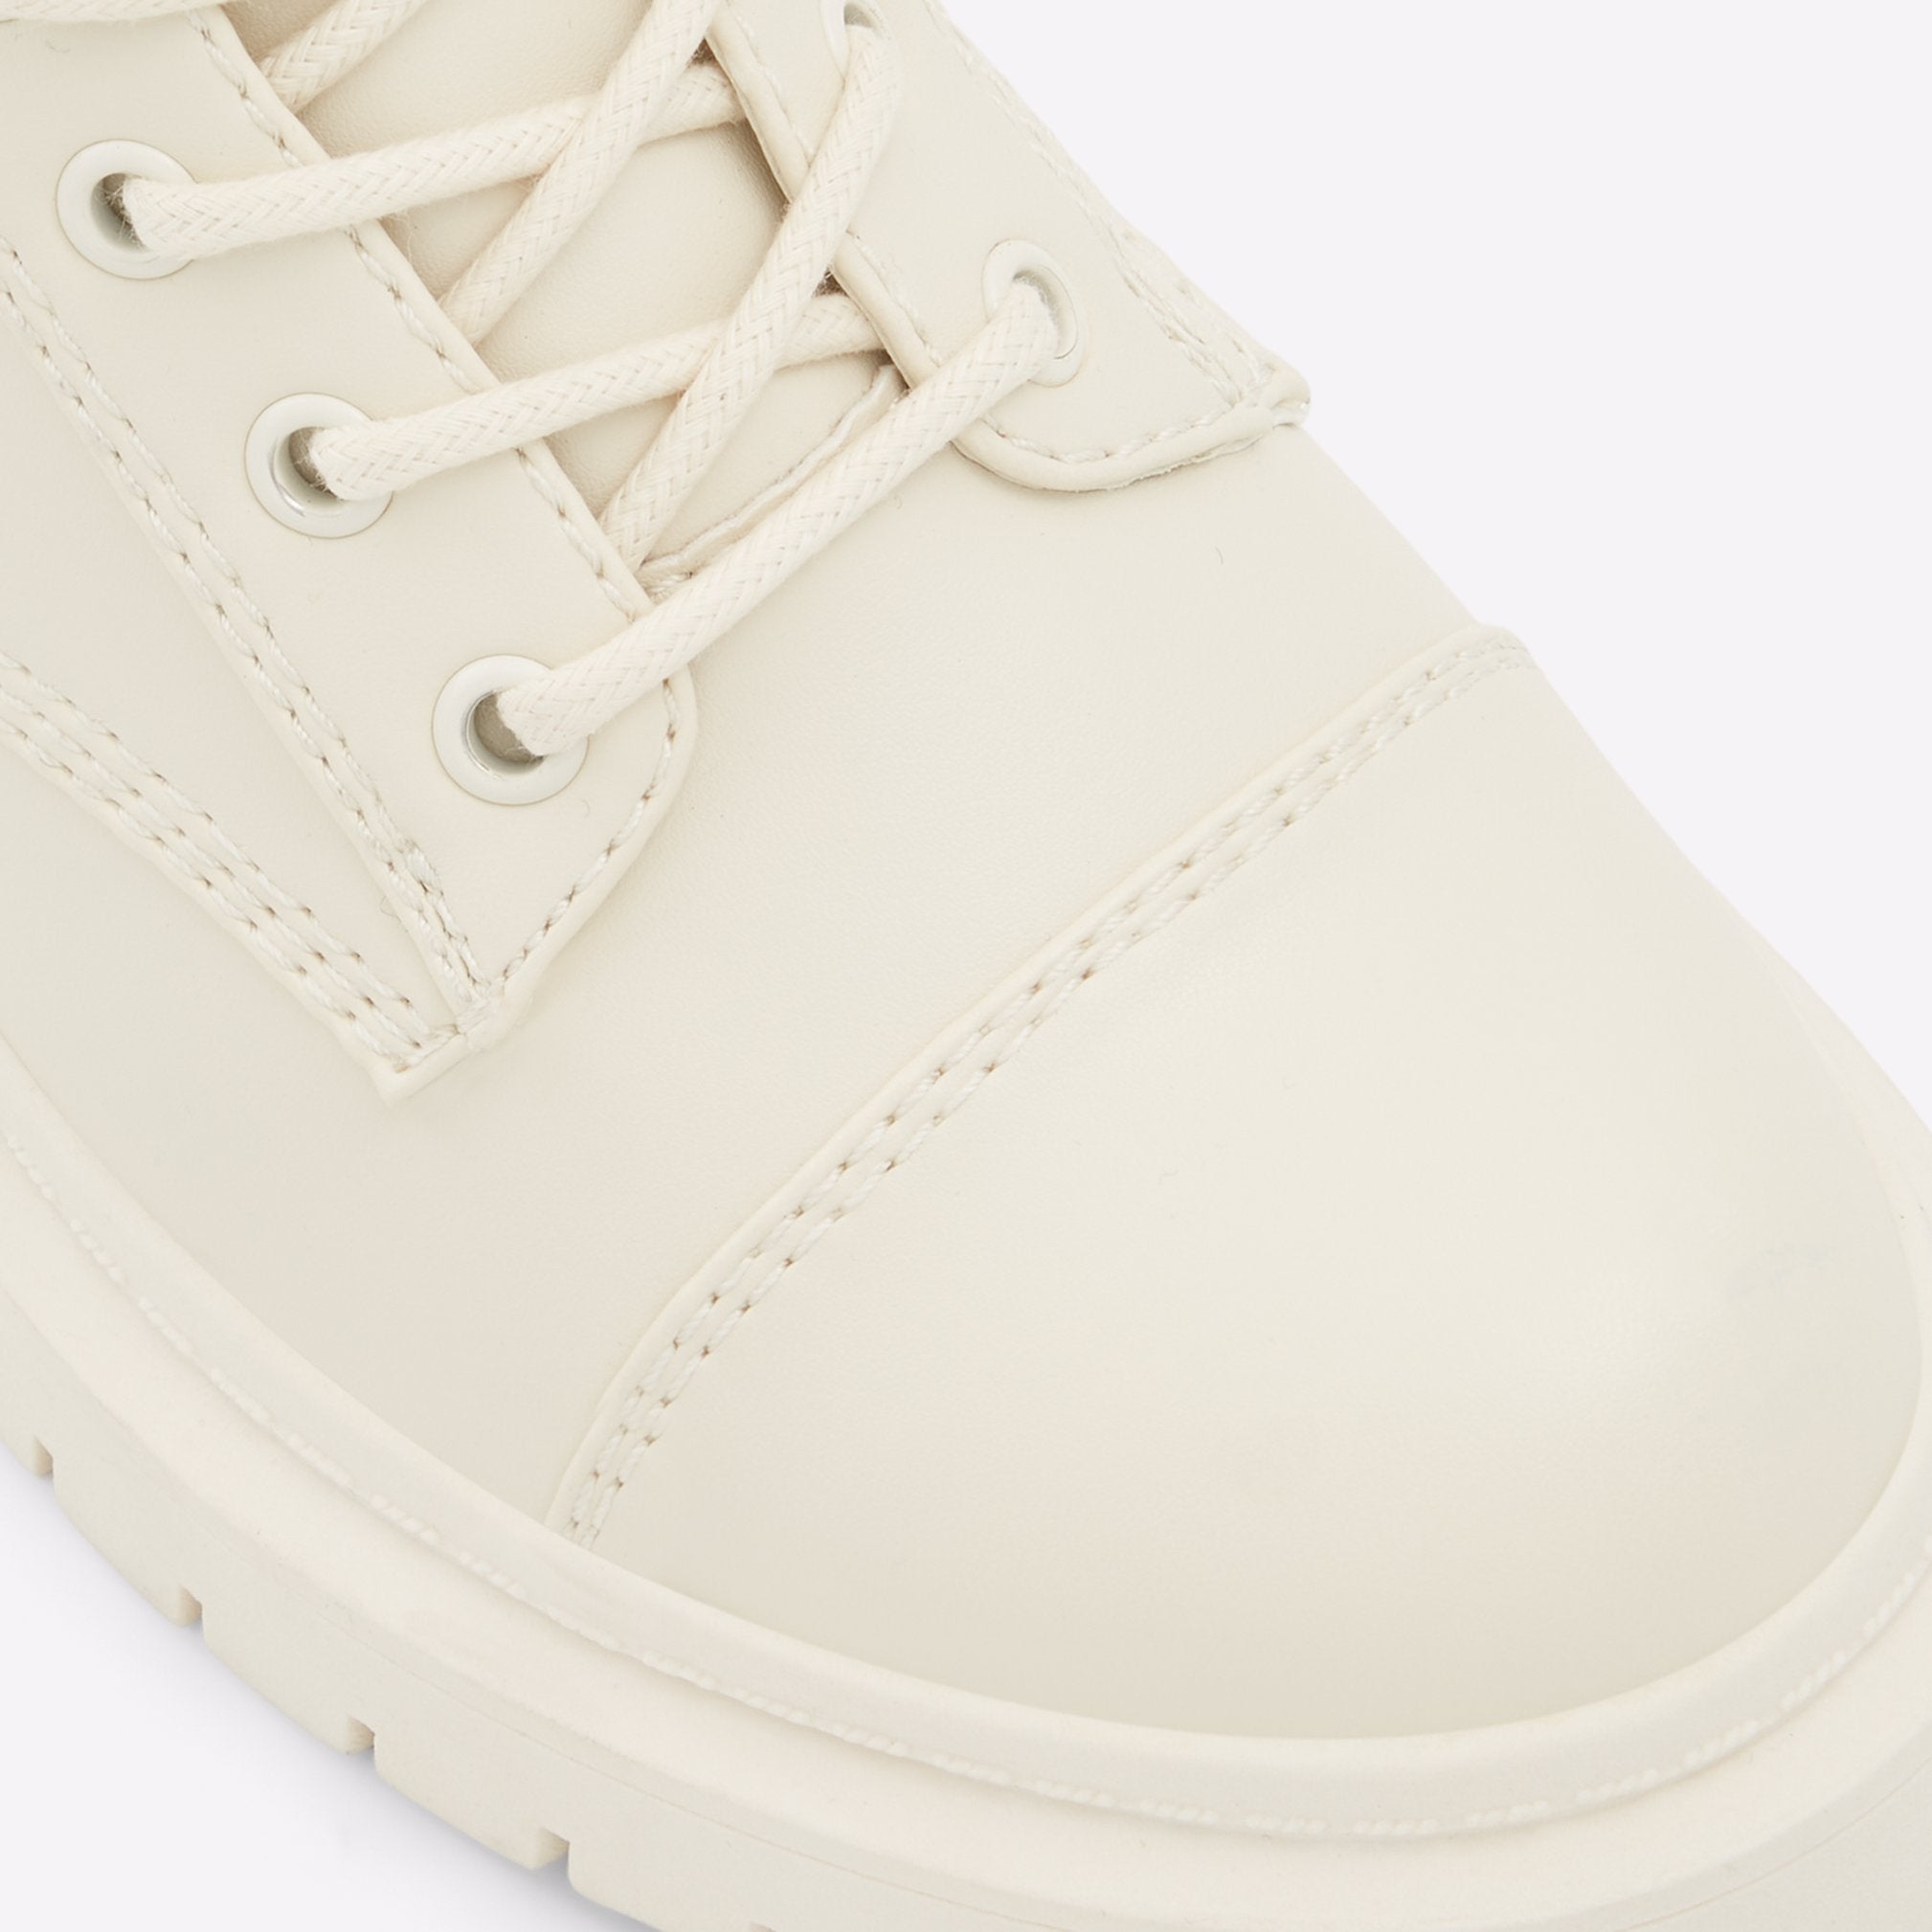 Goer Women Shoes - White - ALDO KSA